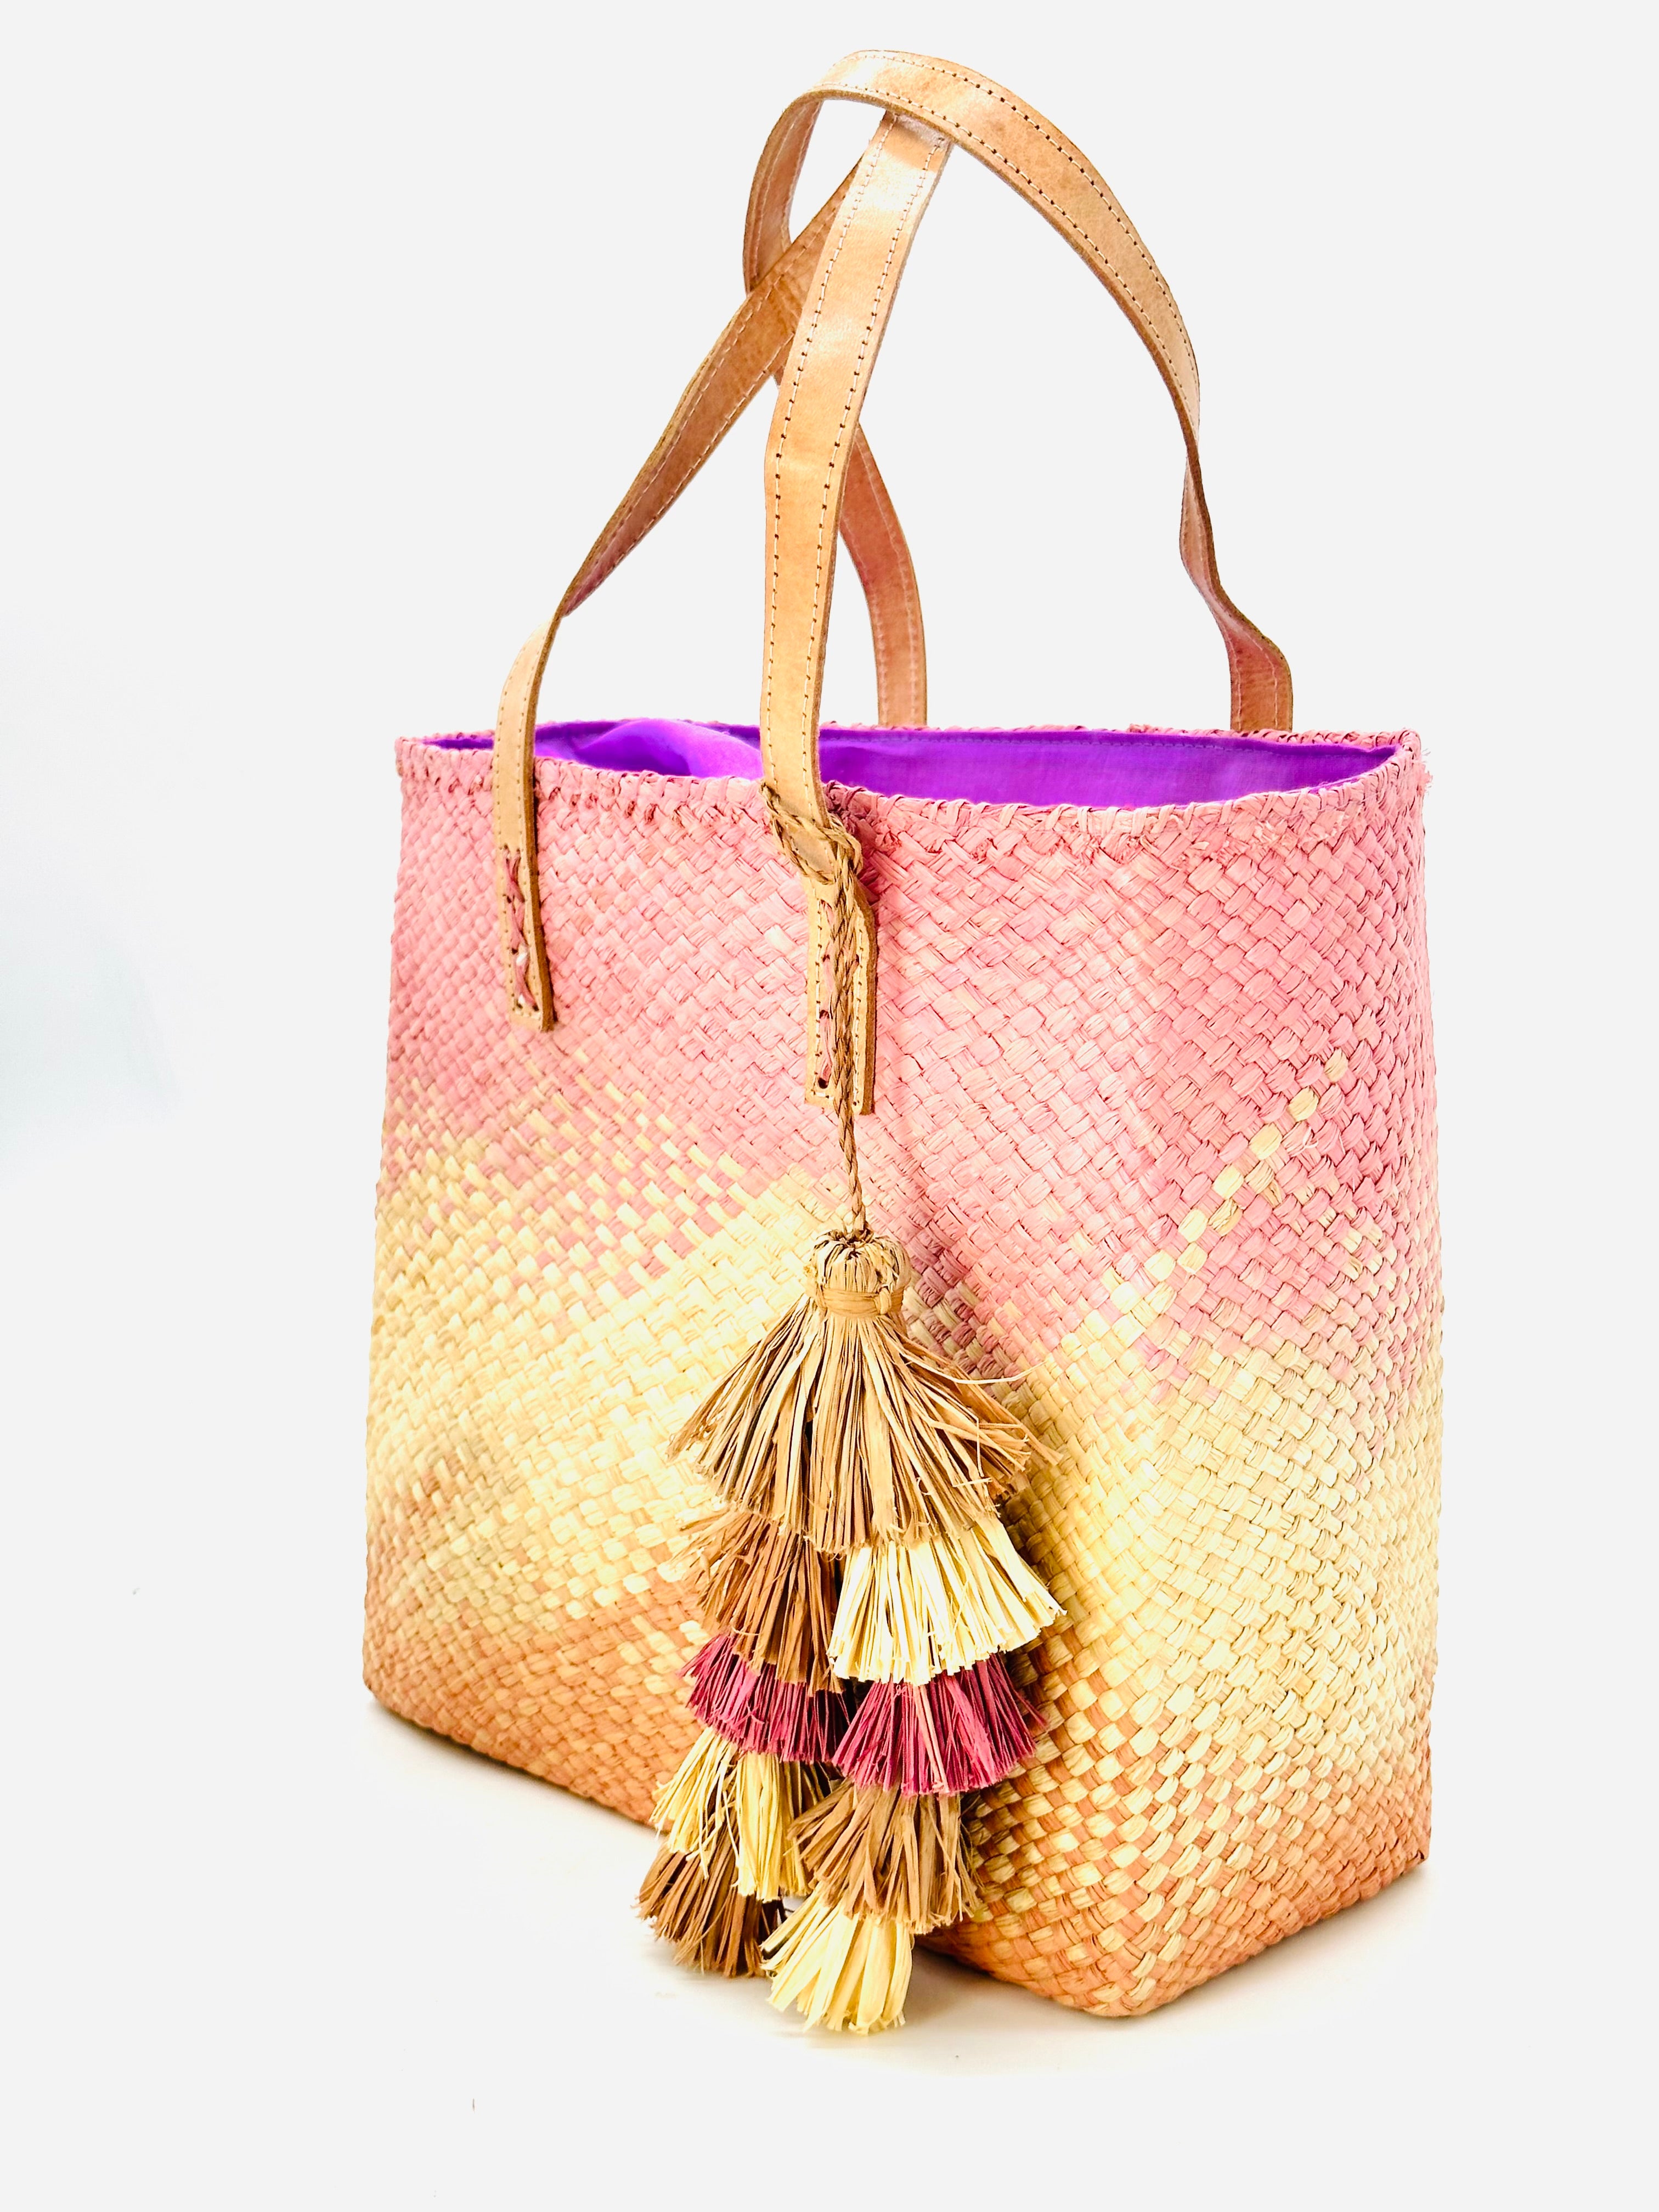 Medium Straw Clutch Bag With Zipper, Wristlet Clutch Bag With Tassels,  Summer Bag, Boho Straw Bag, Crochet Clutch Purse for Women - Etsy